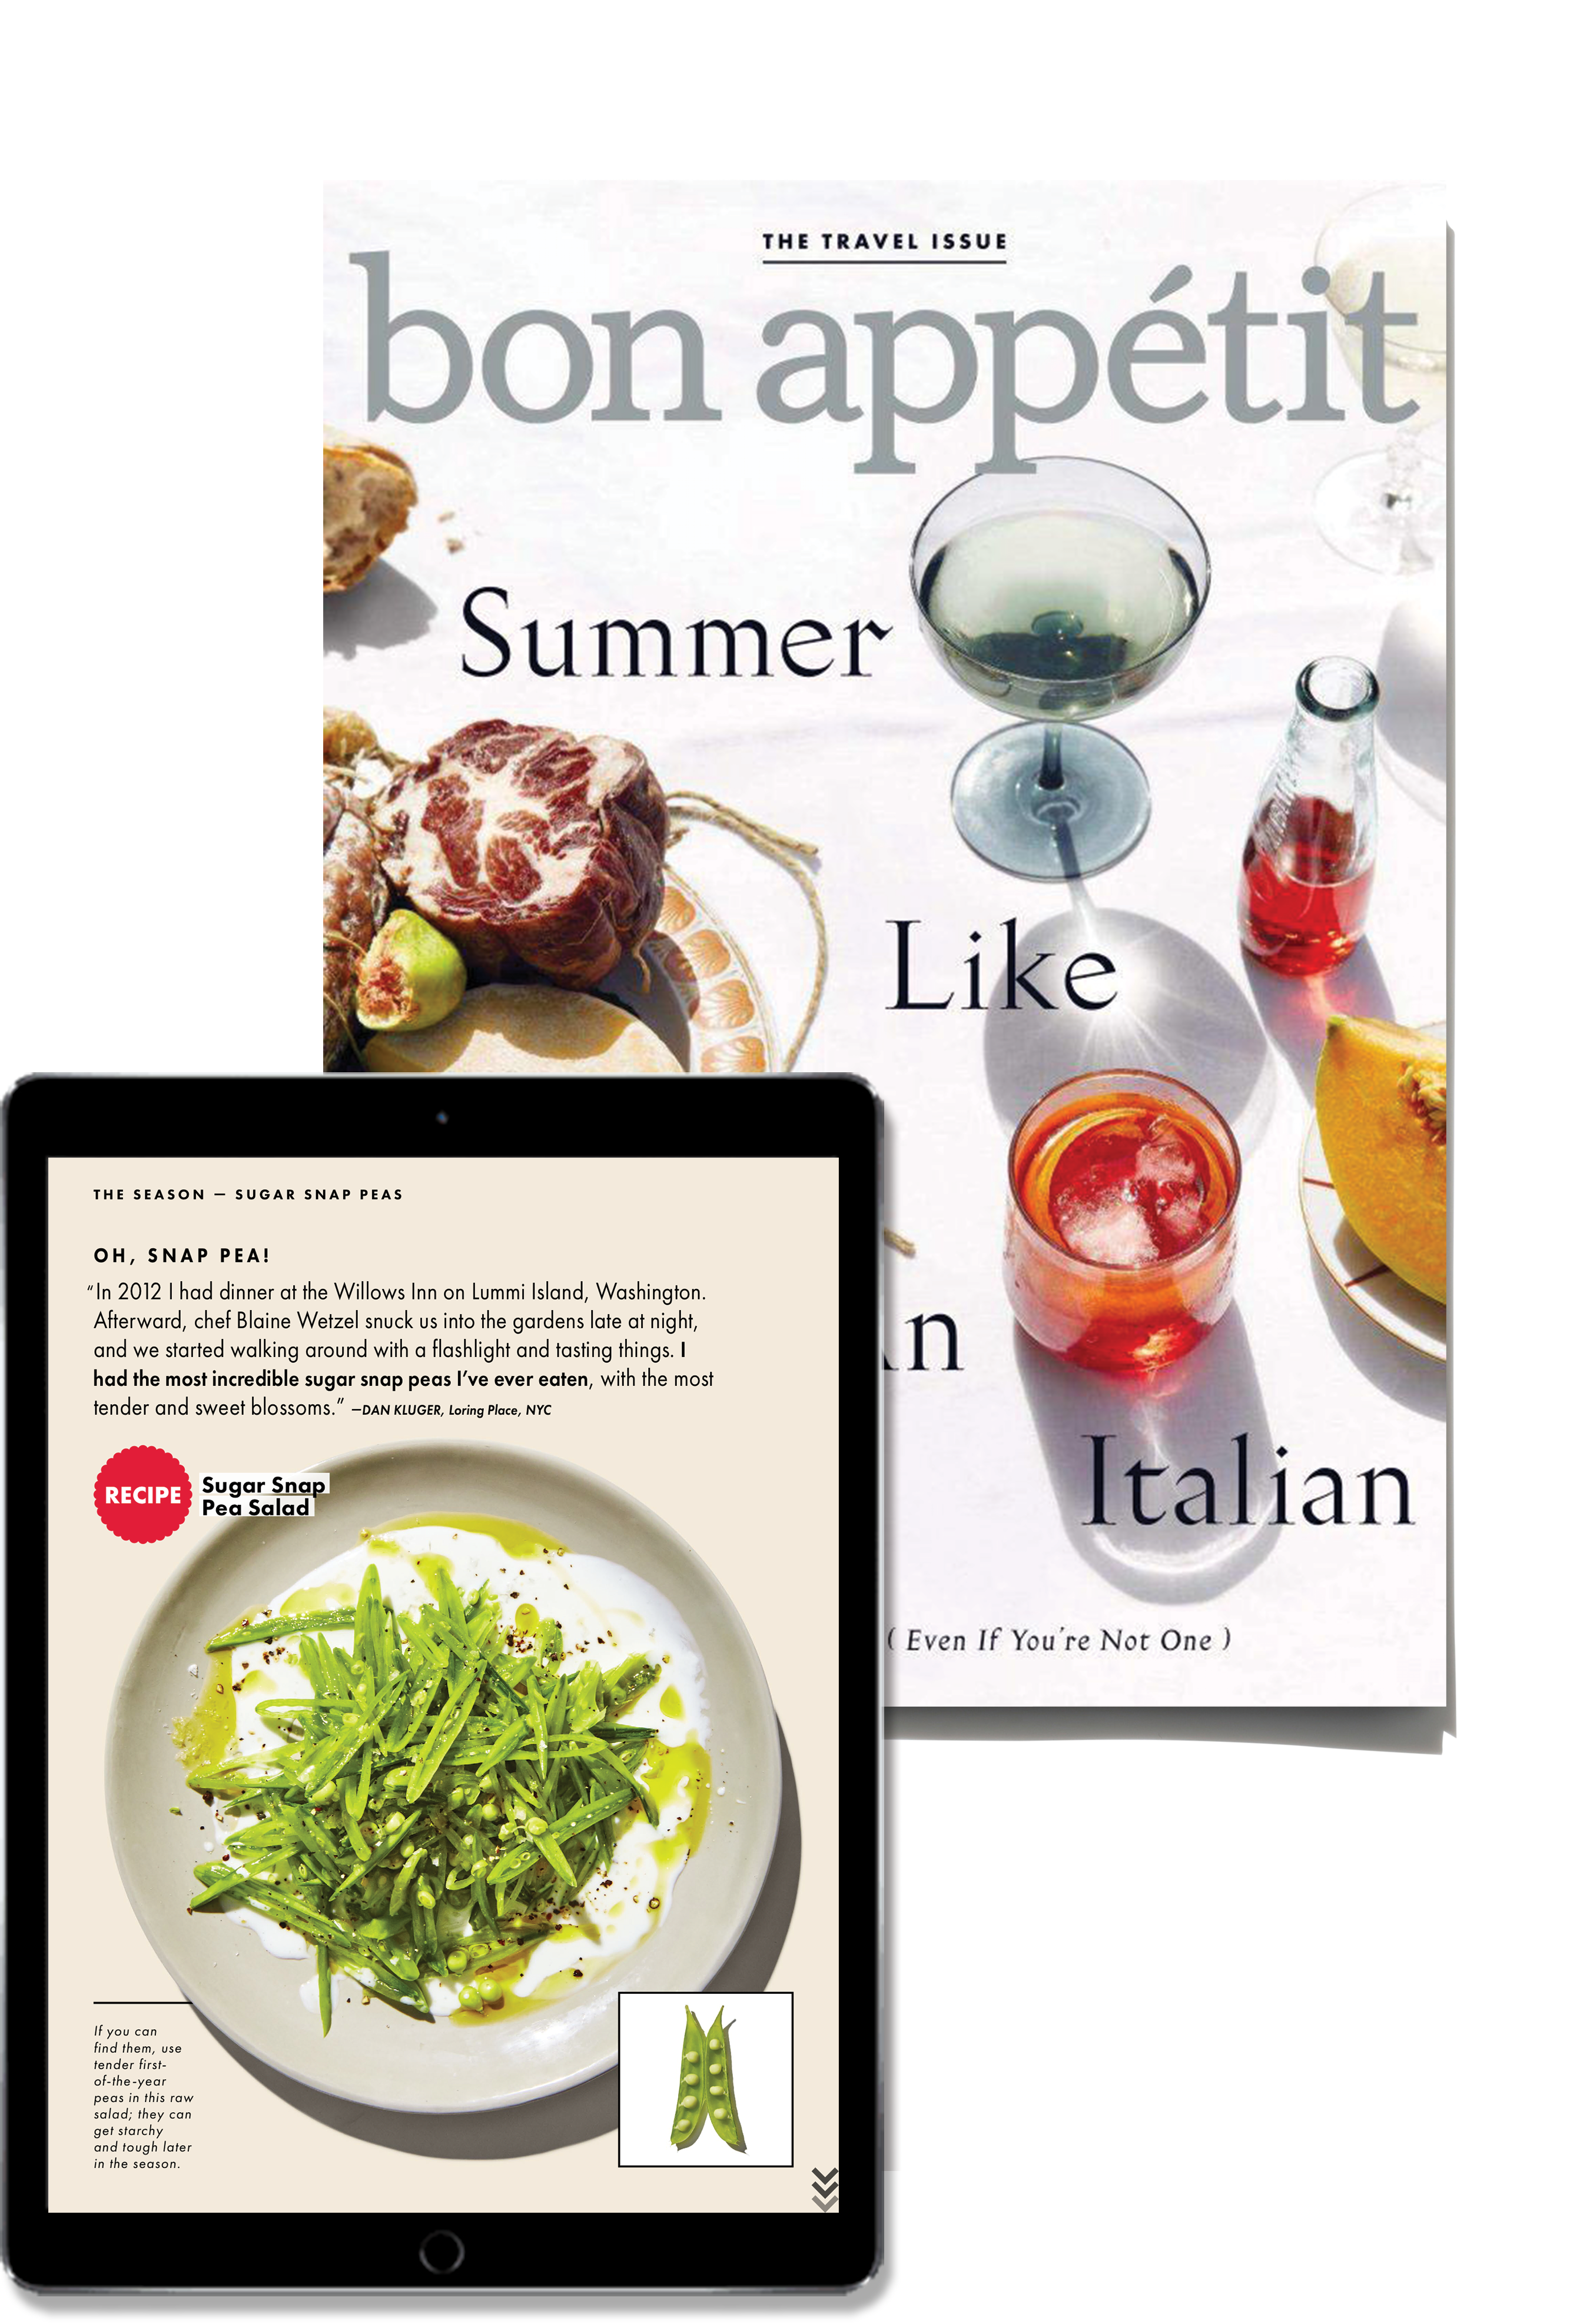 Bon Appetit magazine and app